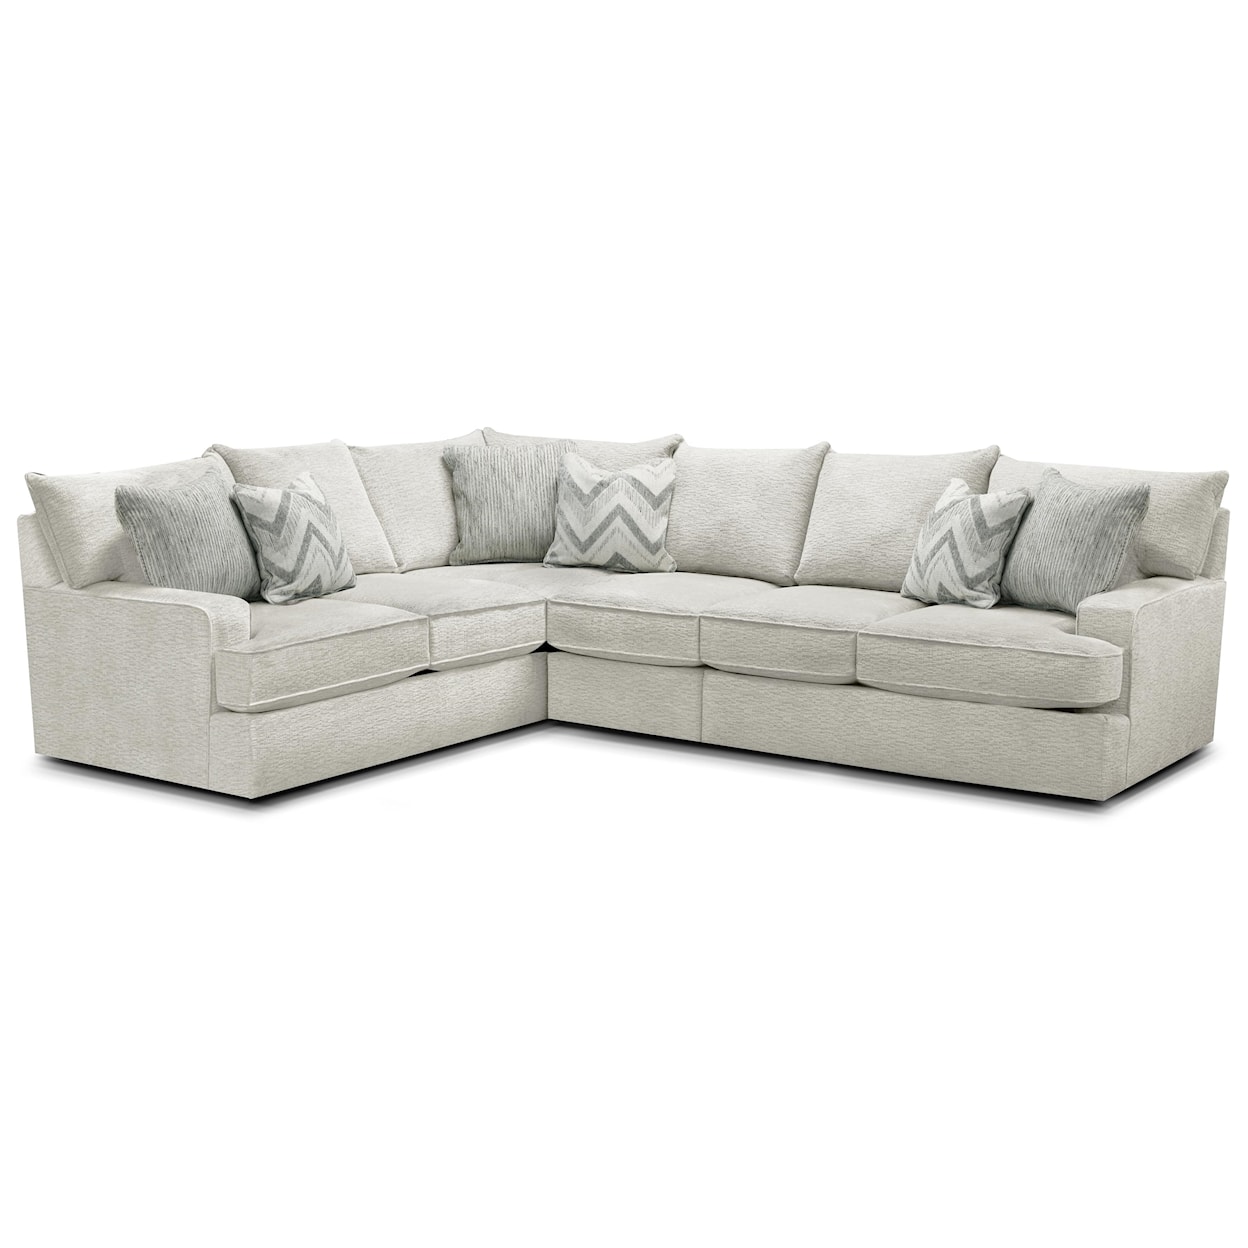 England 3300 Series 3-Piece Sectional Sofa